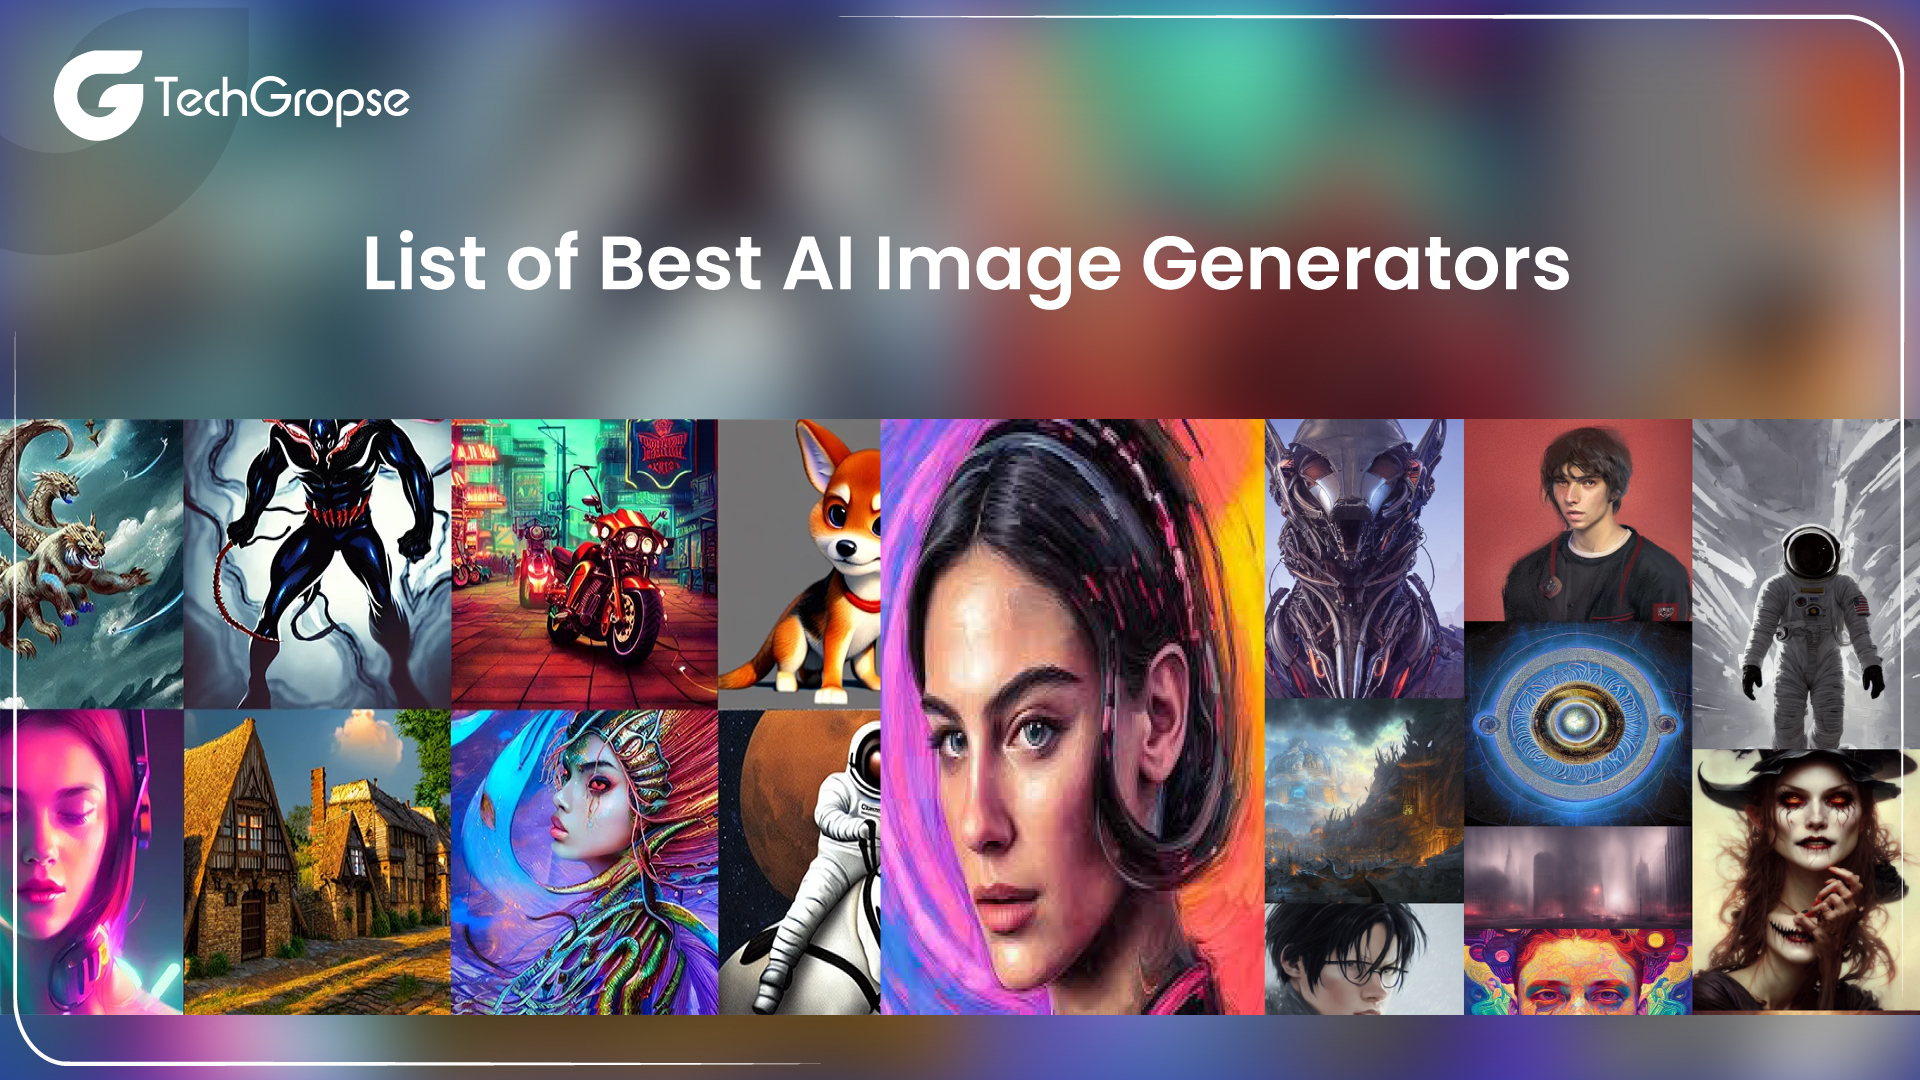 List of Best AI Image Generators